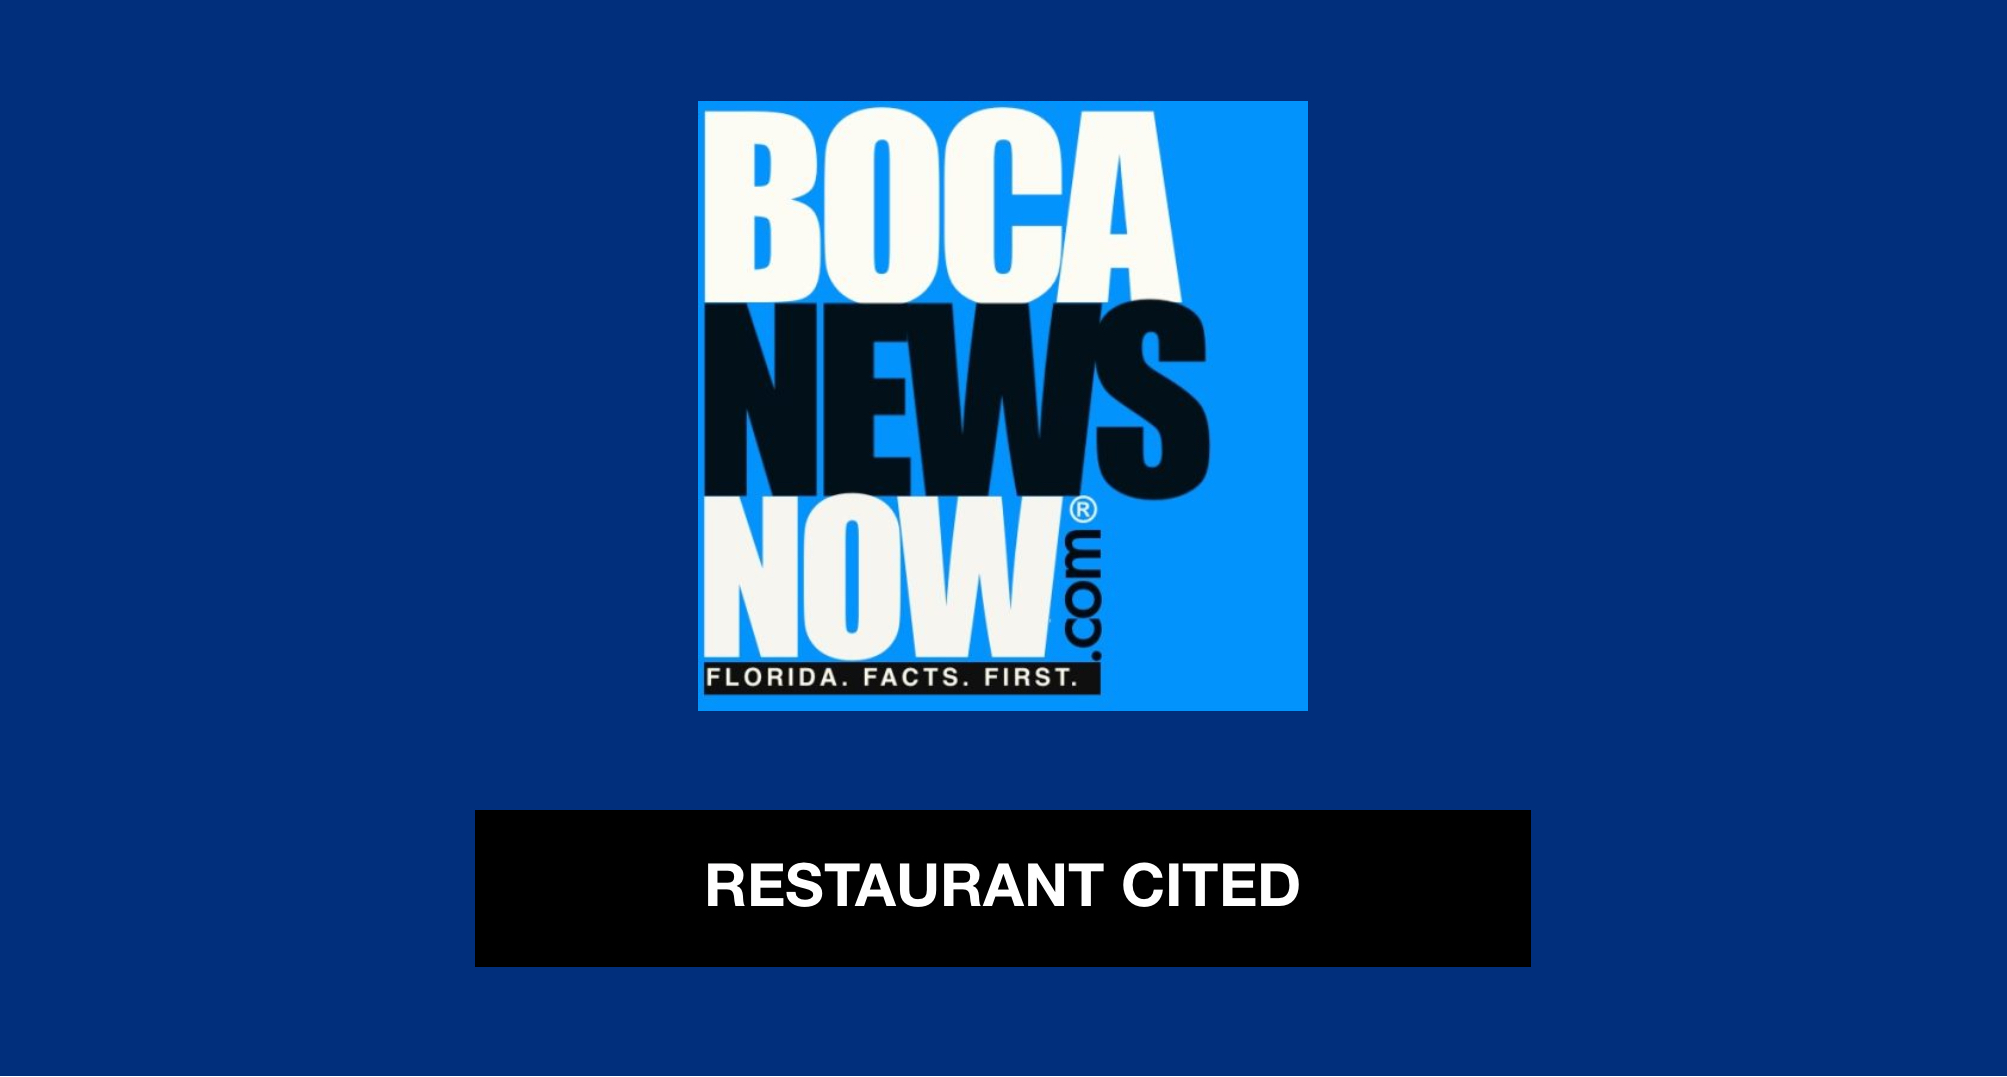 Restaurant_Cited_BocaNewsNow